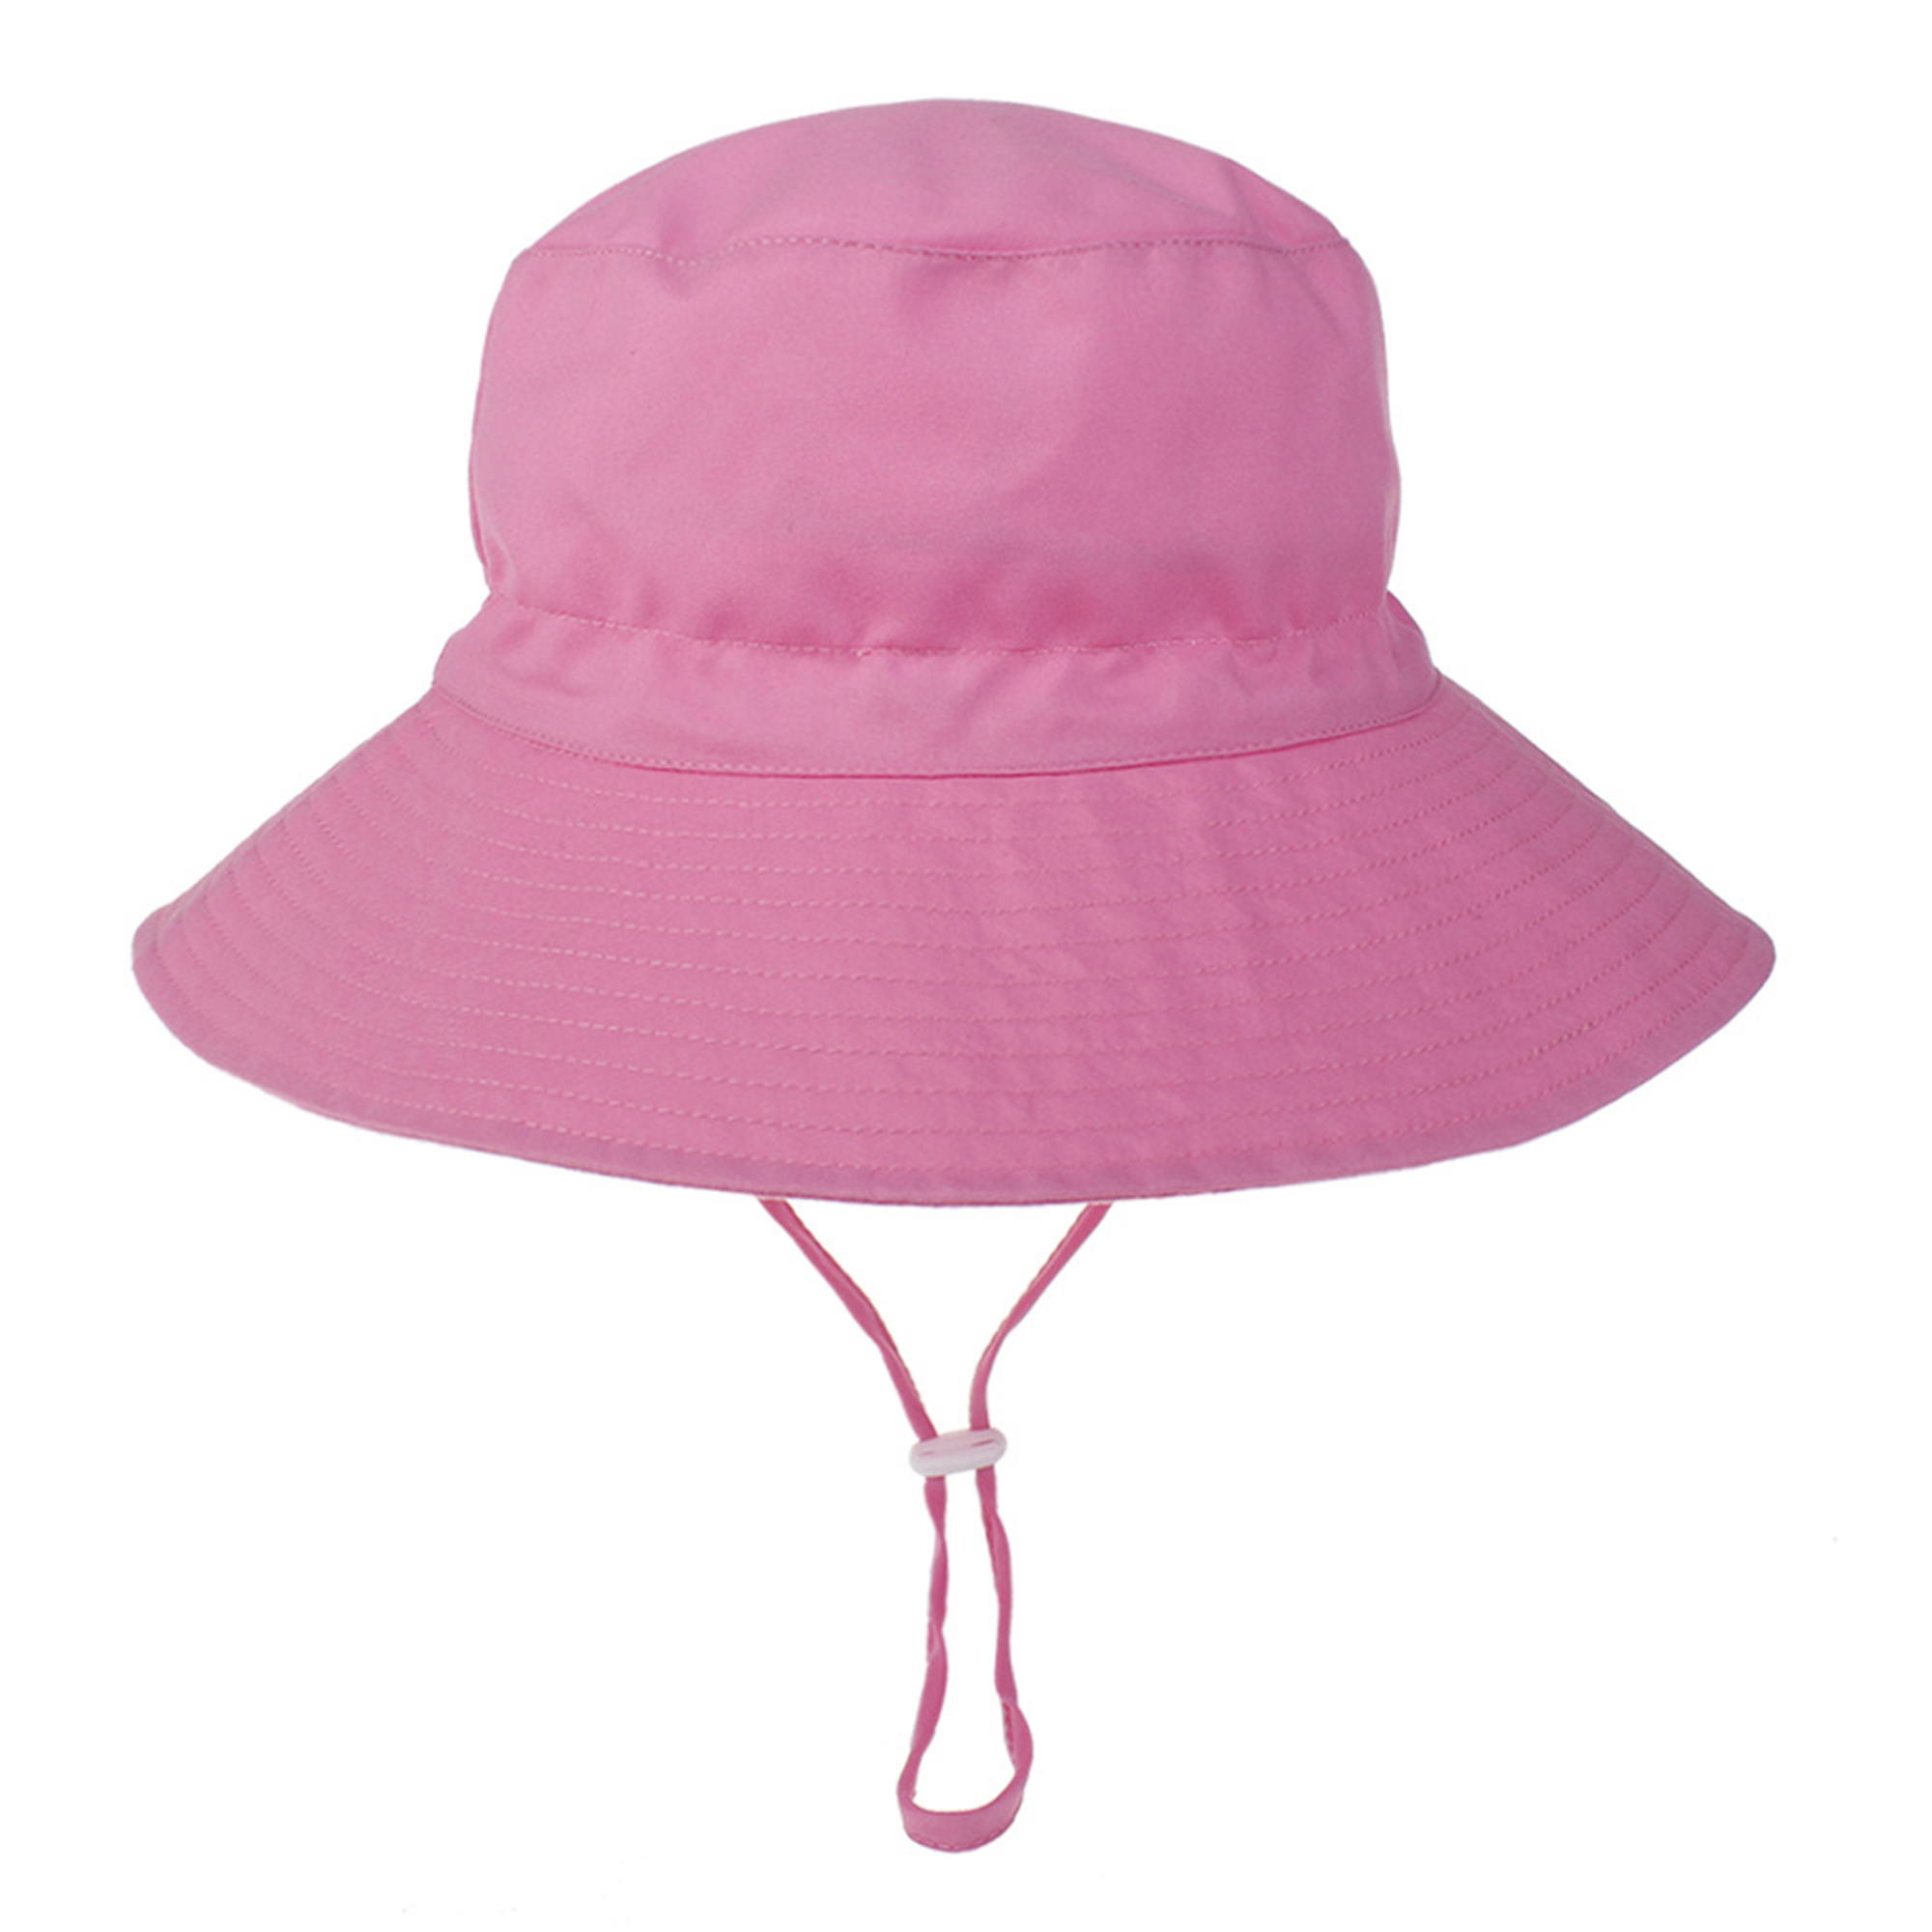 Suanret Kids Girls Printed Hats Sun Protection Bucket Hat Outdoor Fishman Caps - image 1 of 1